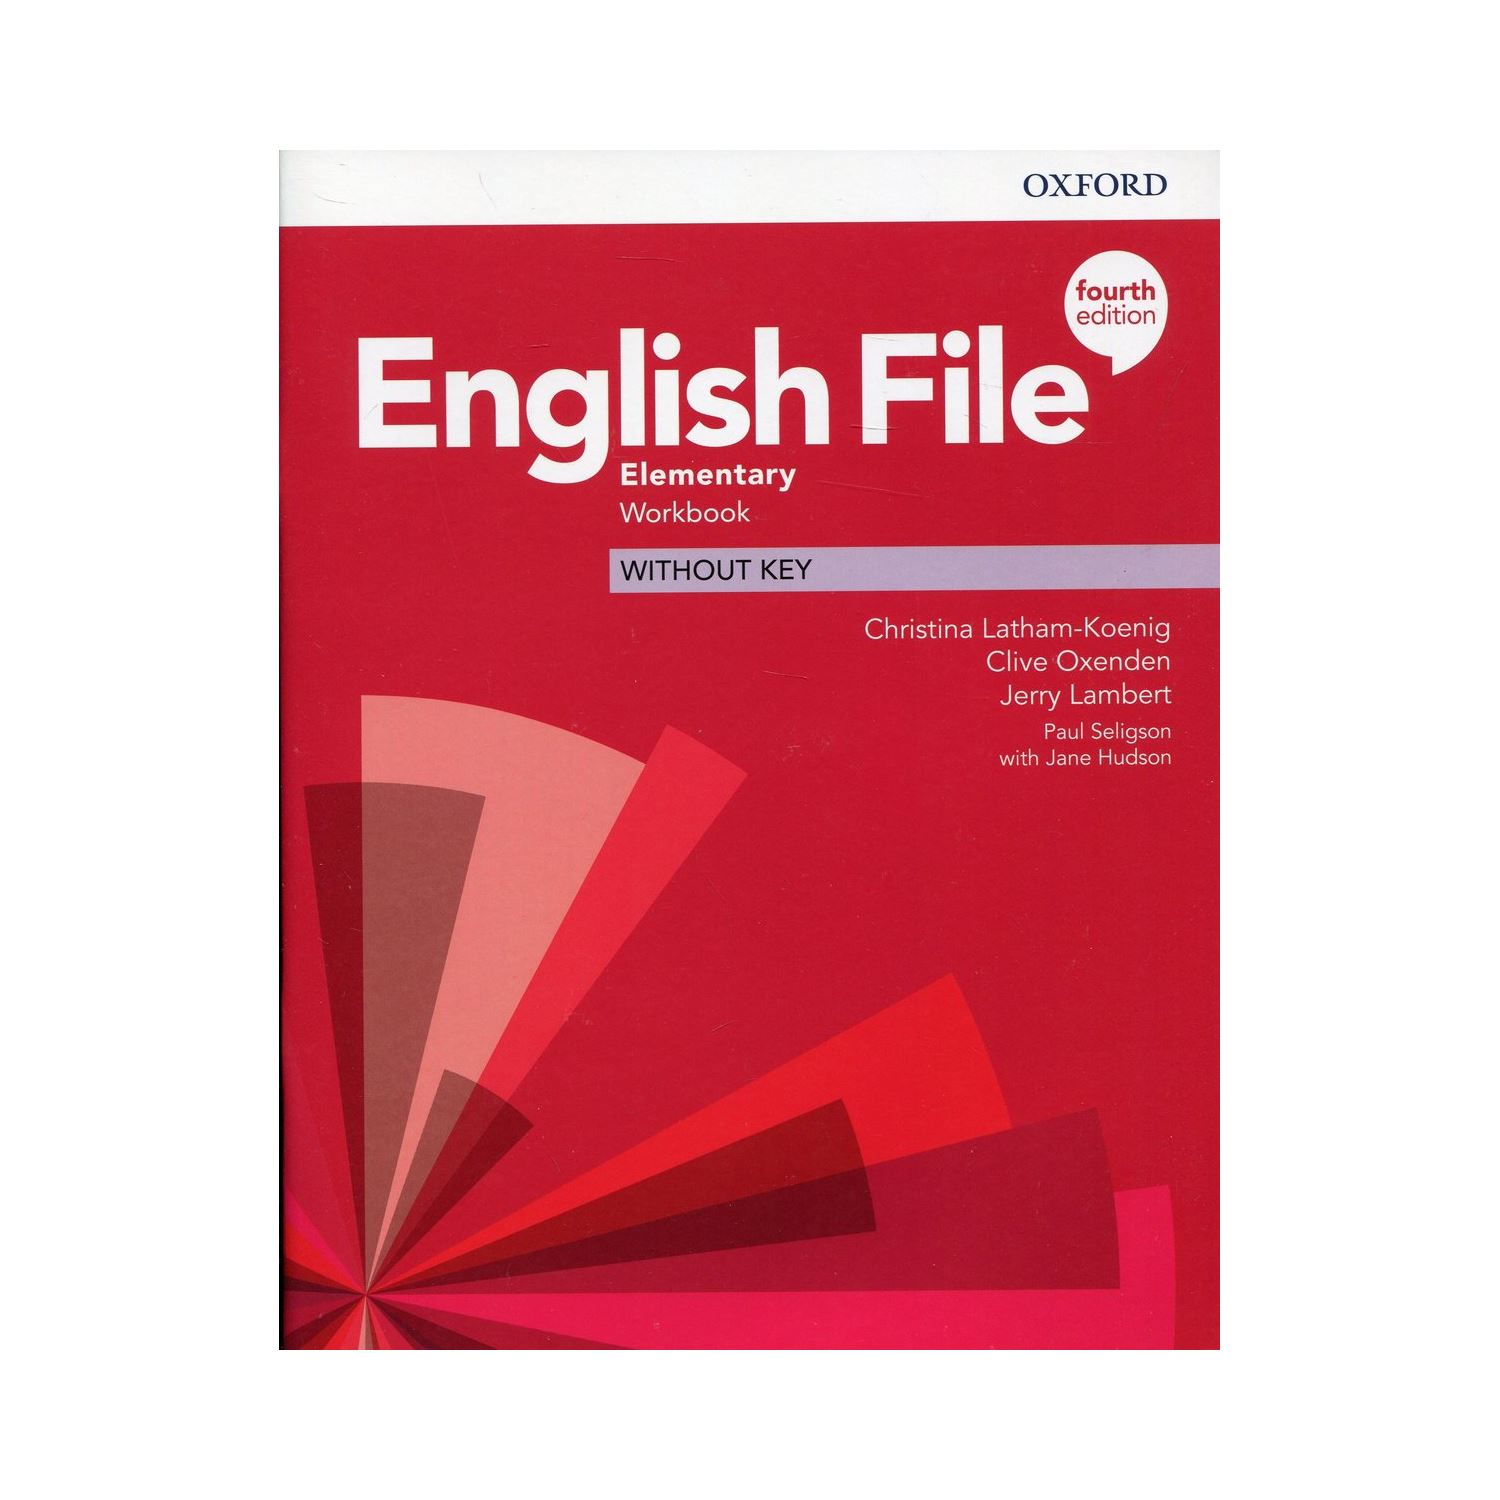 English file upper intermediate keys. English file. Английский книги English file. English file 4th Edition. English file Upper Intermediate.